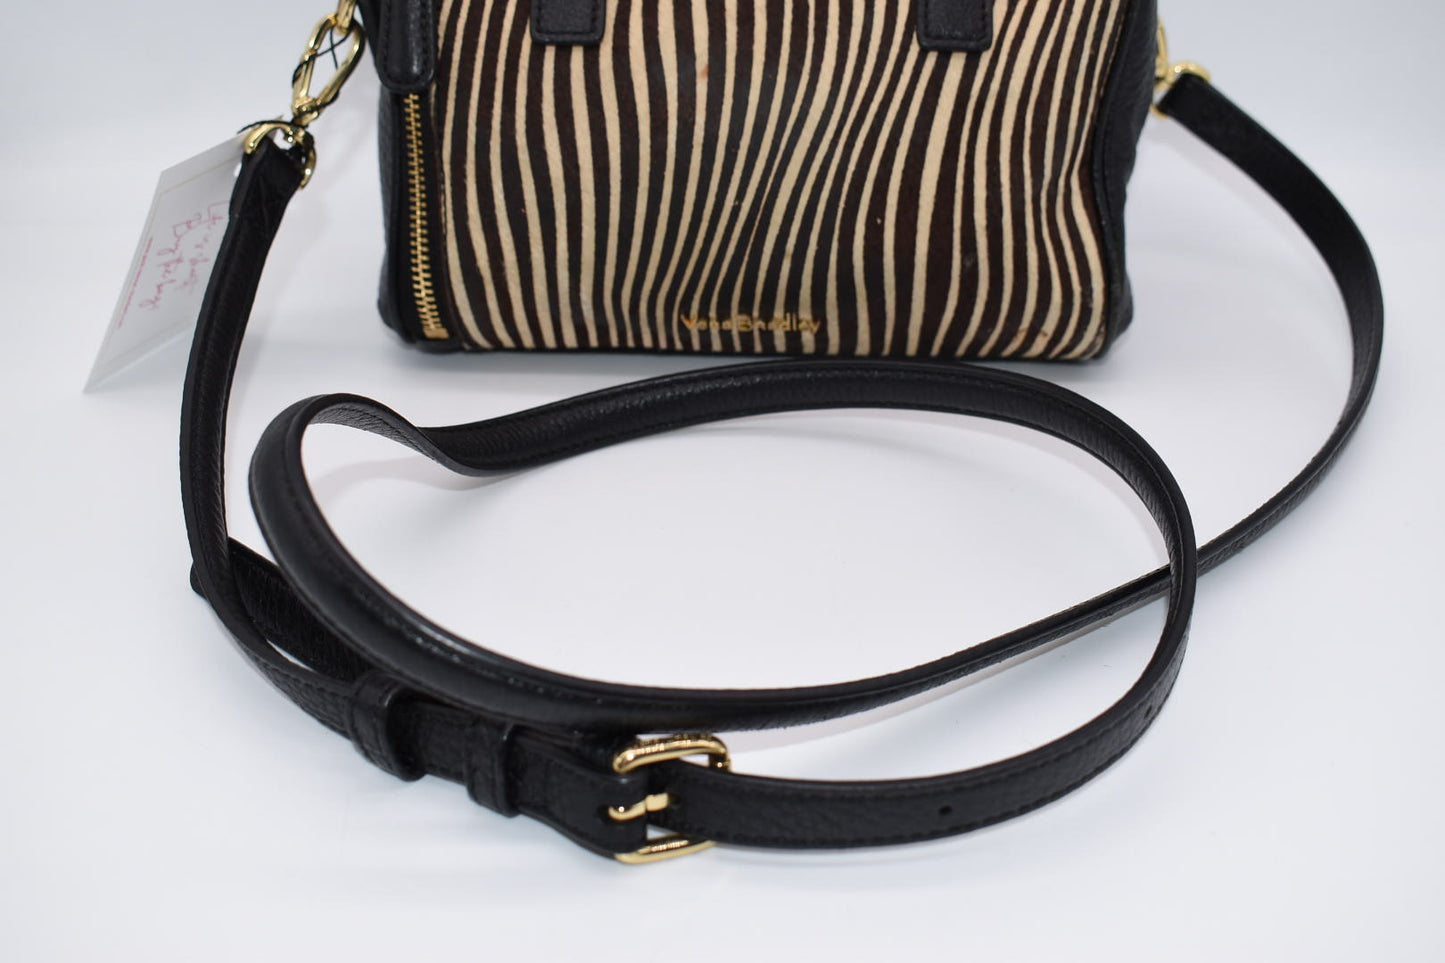 Vera Bradley "Uptown Stripes" Mini Marlo Satchel Bag